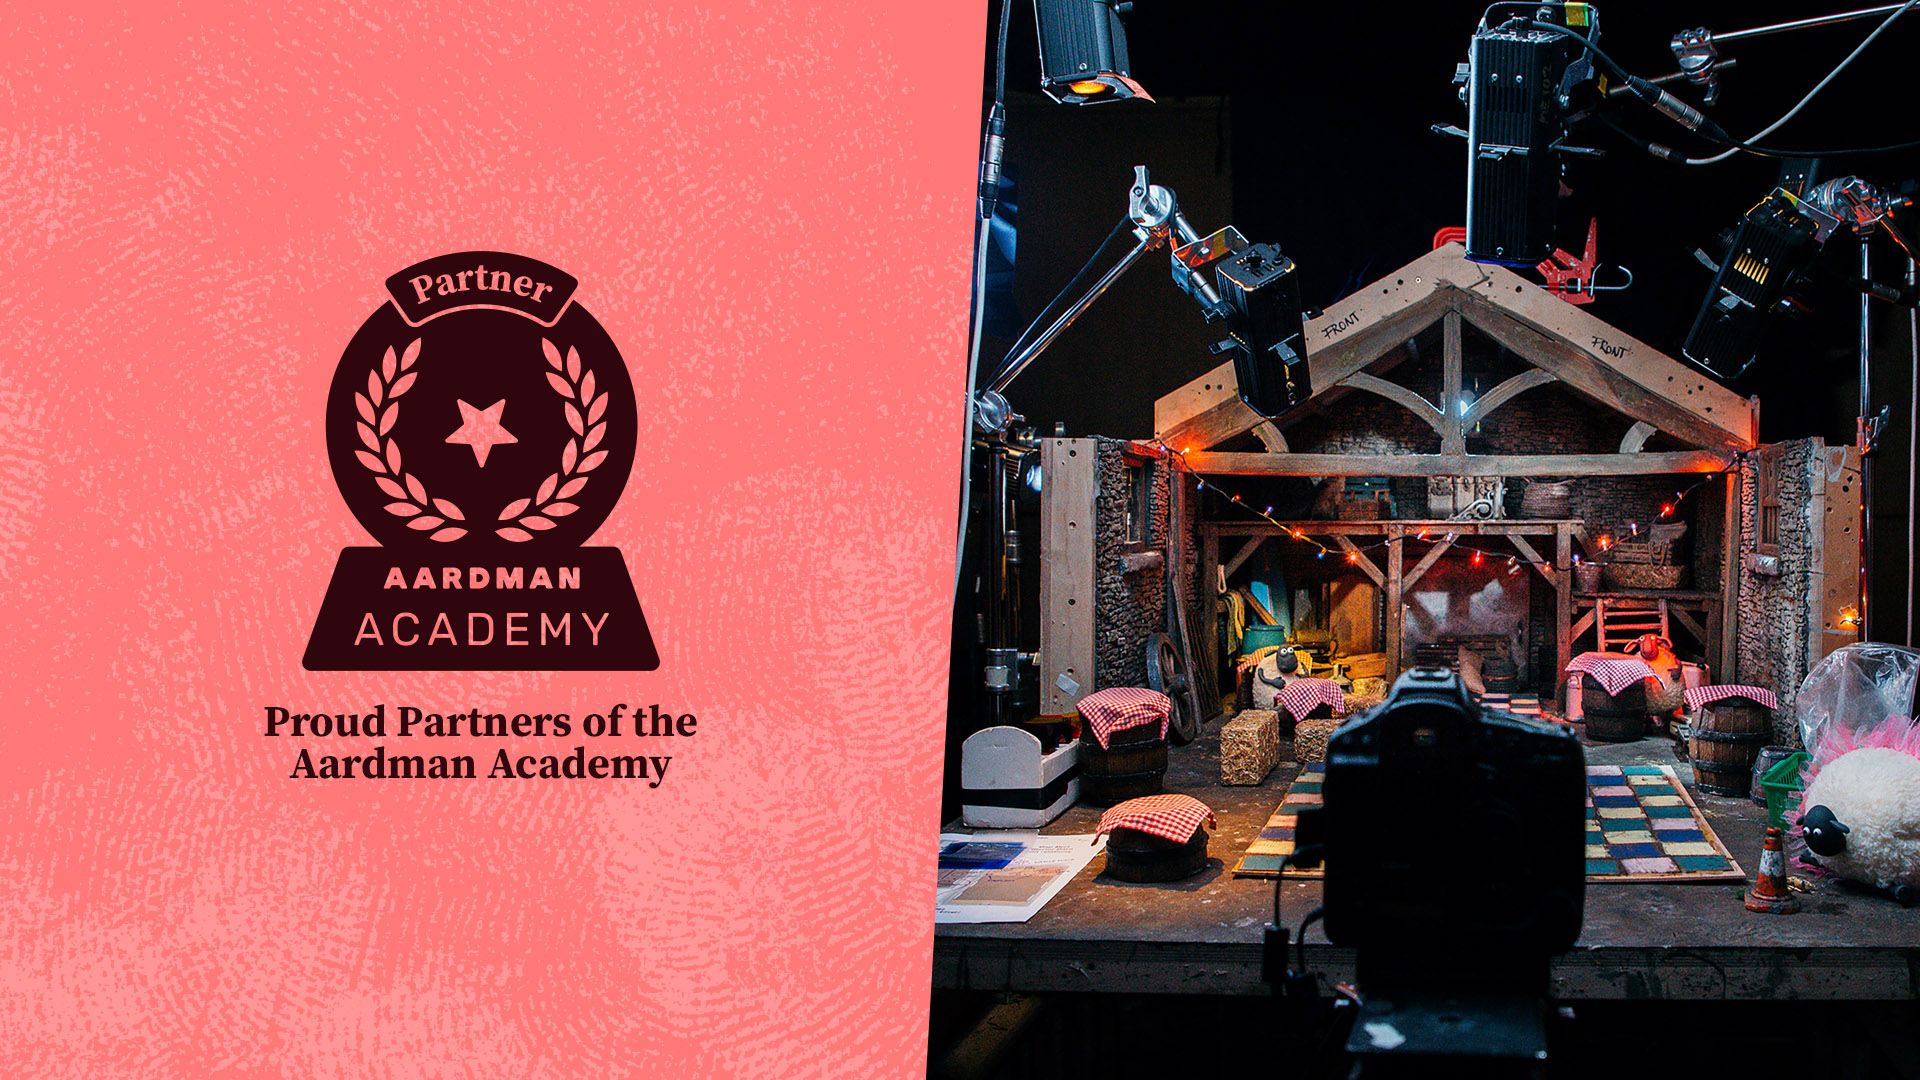 Aardman Academy Partnership